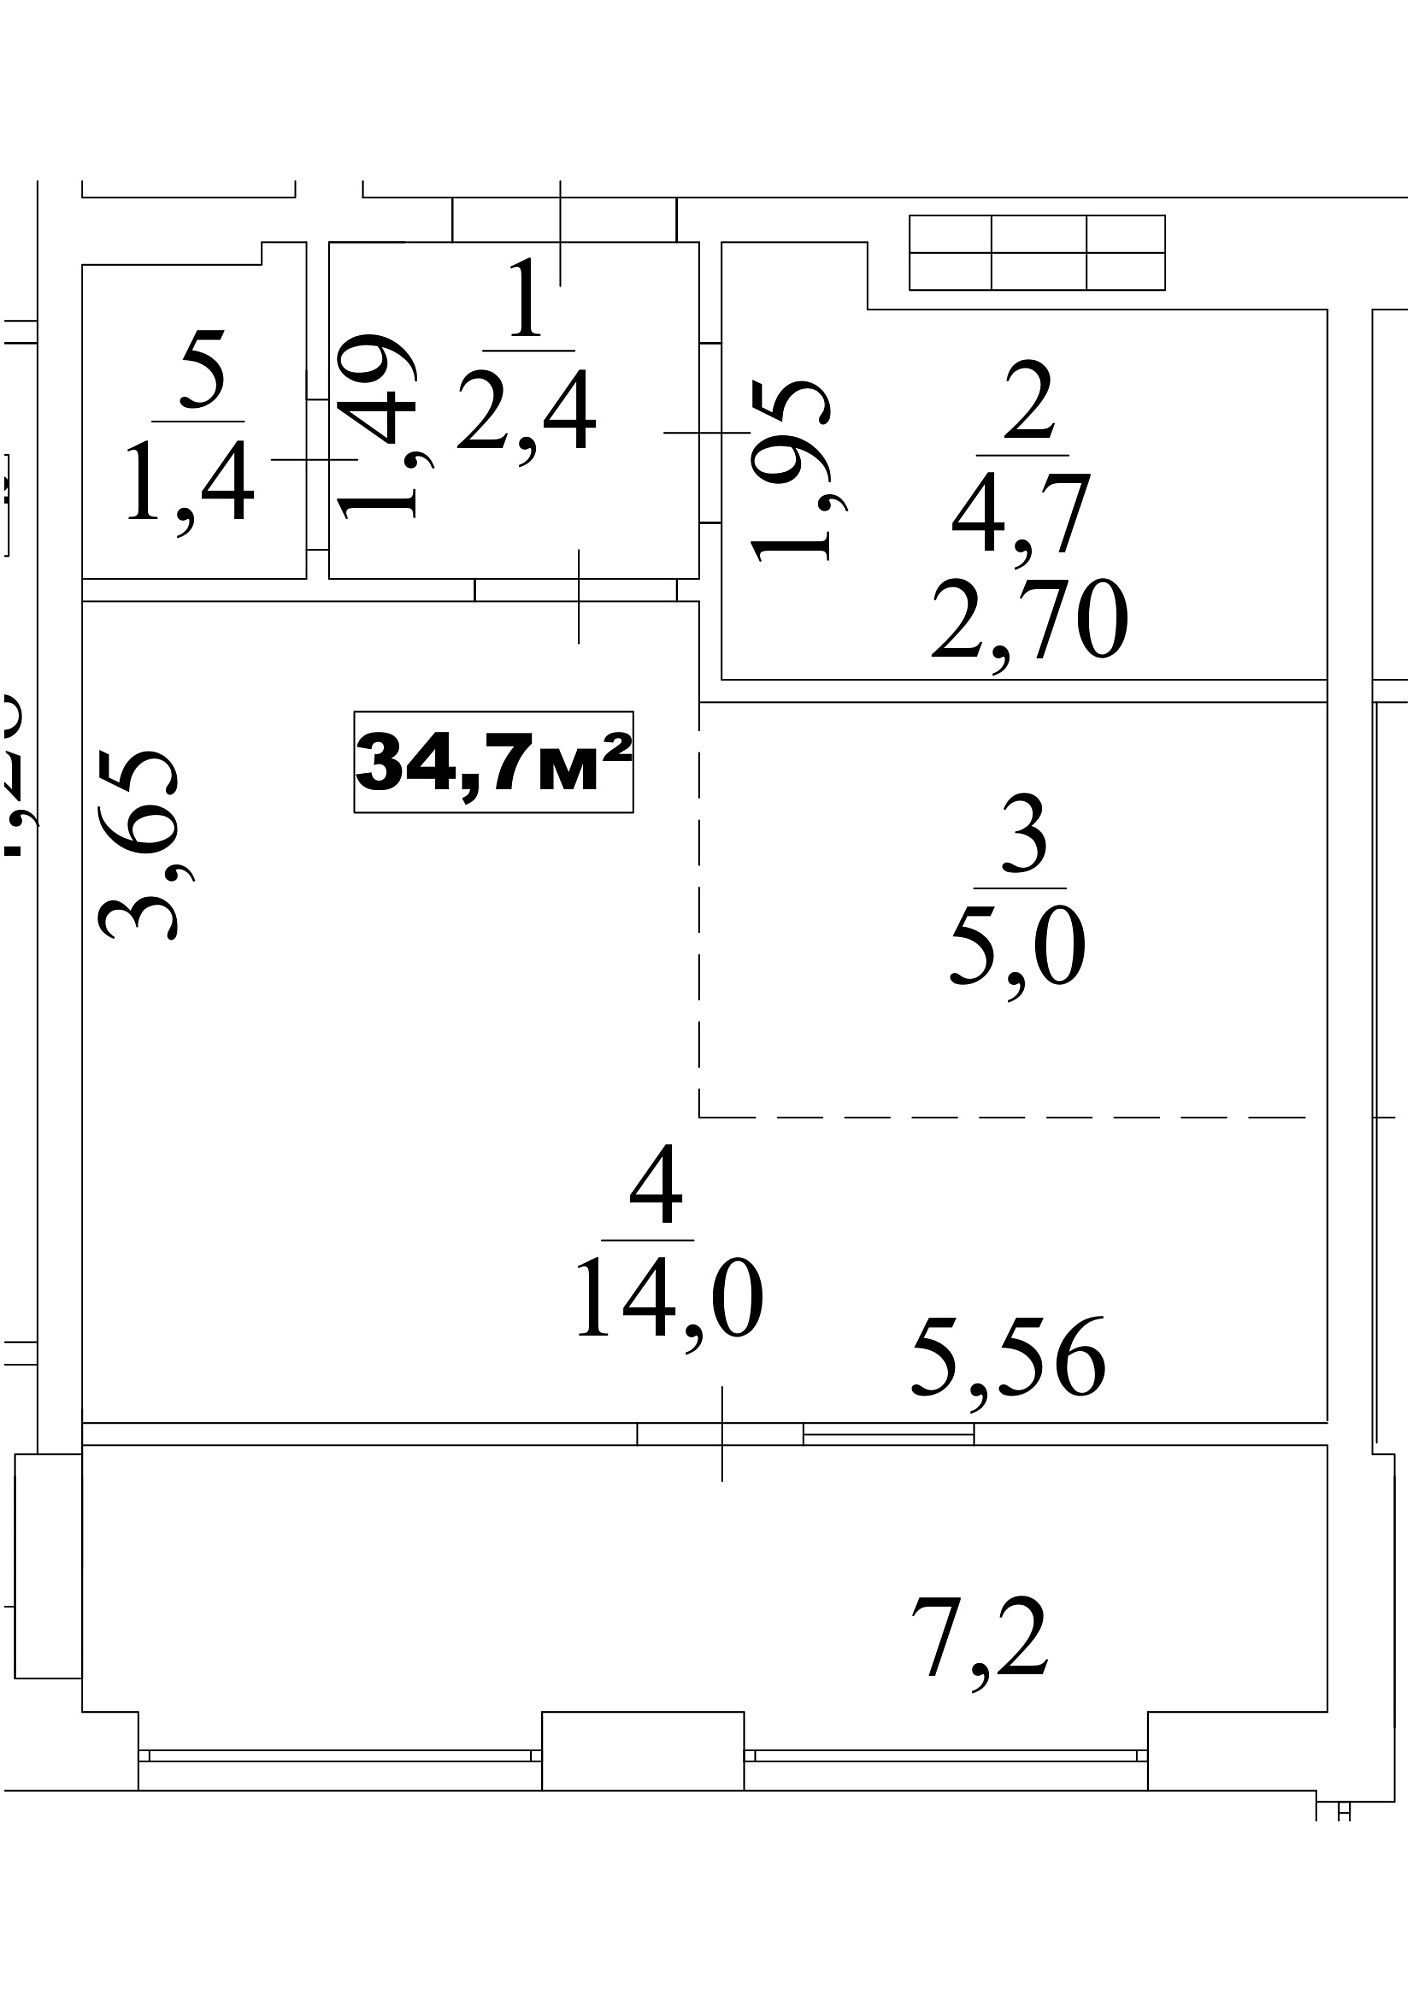 Planning Smart flats area 34.7m2, AB-10-06/00047.